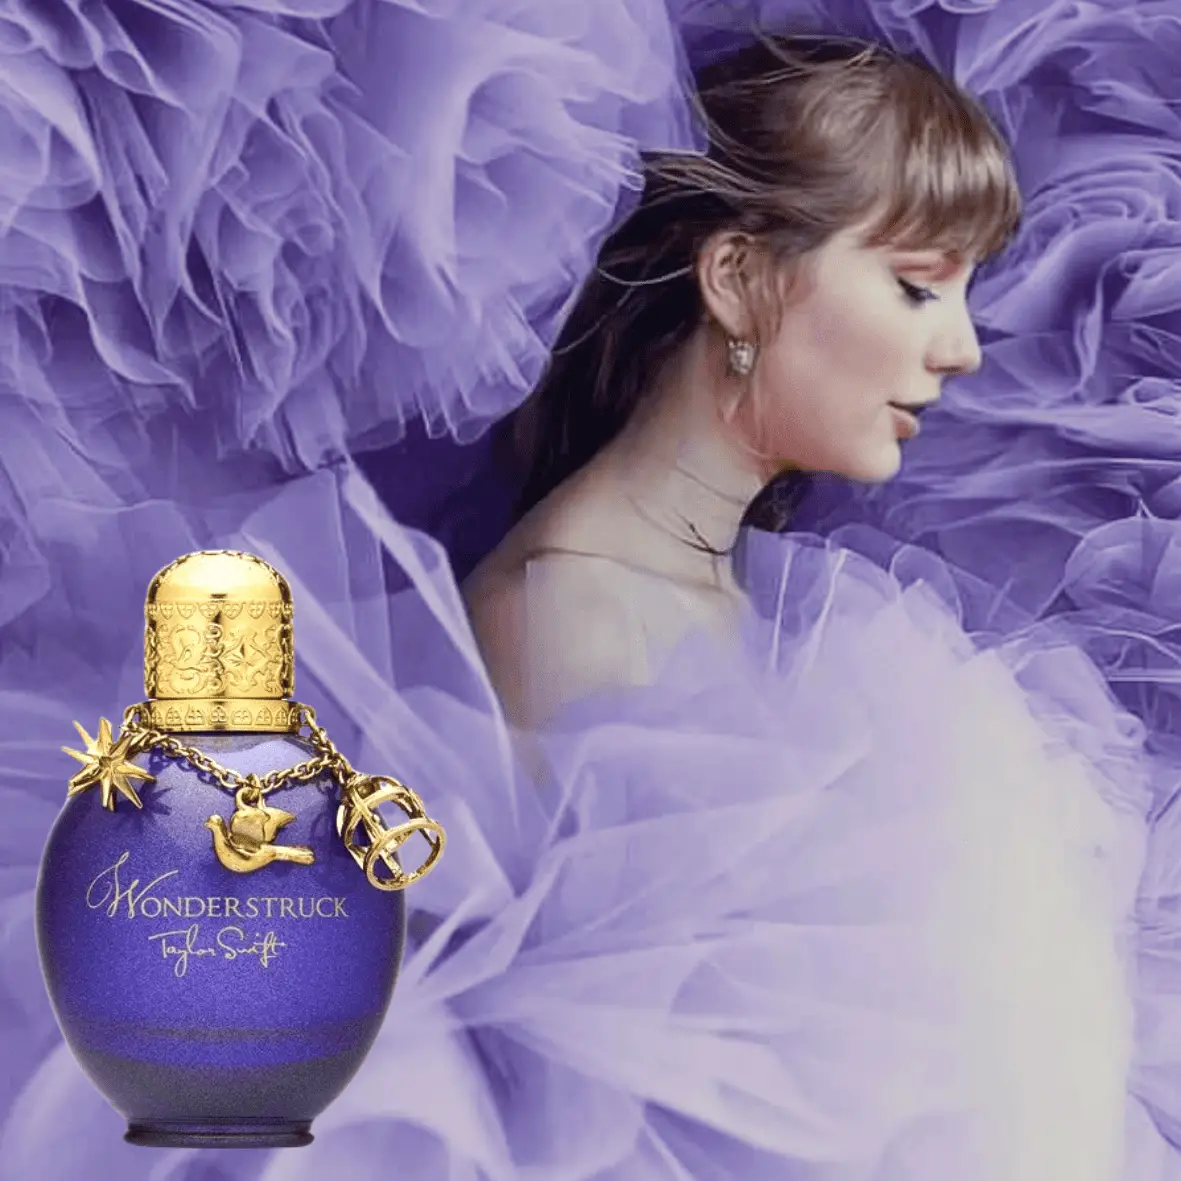 Taylor Wisft Wonderstruck perfume